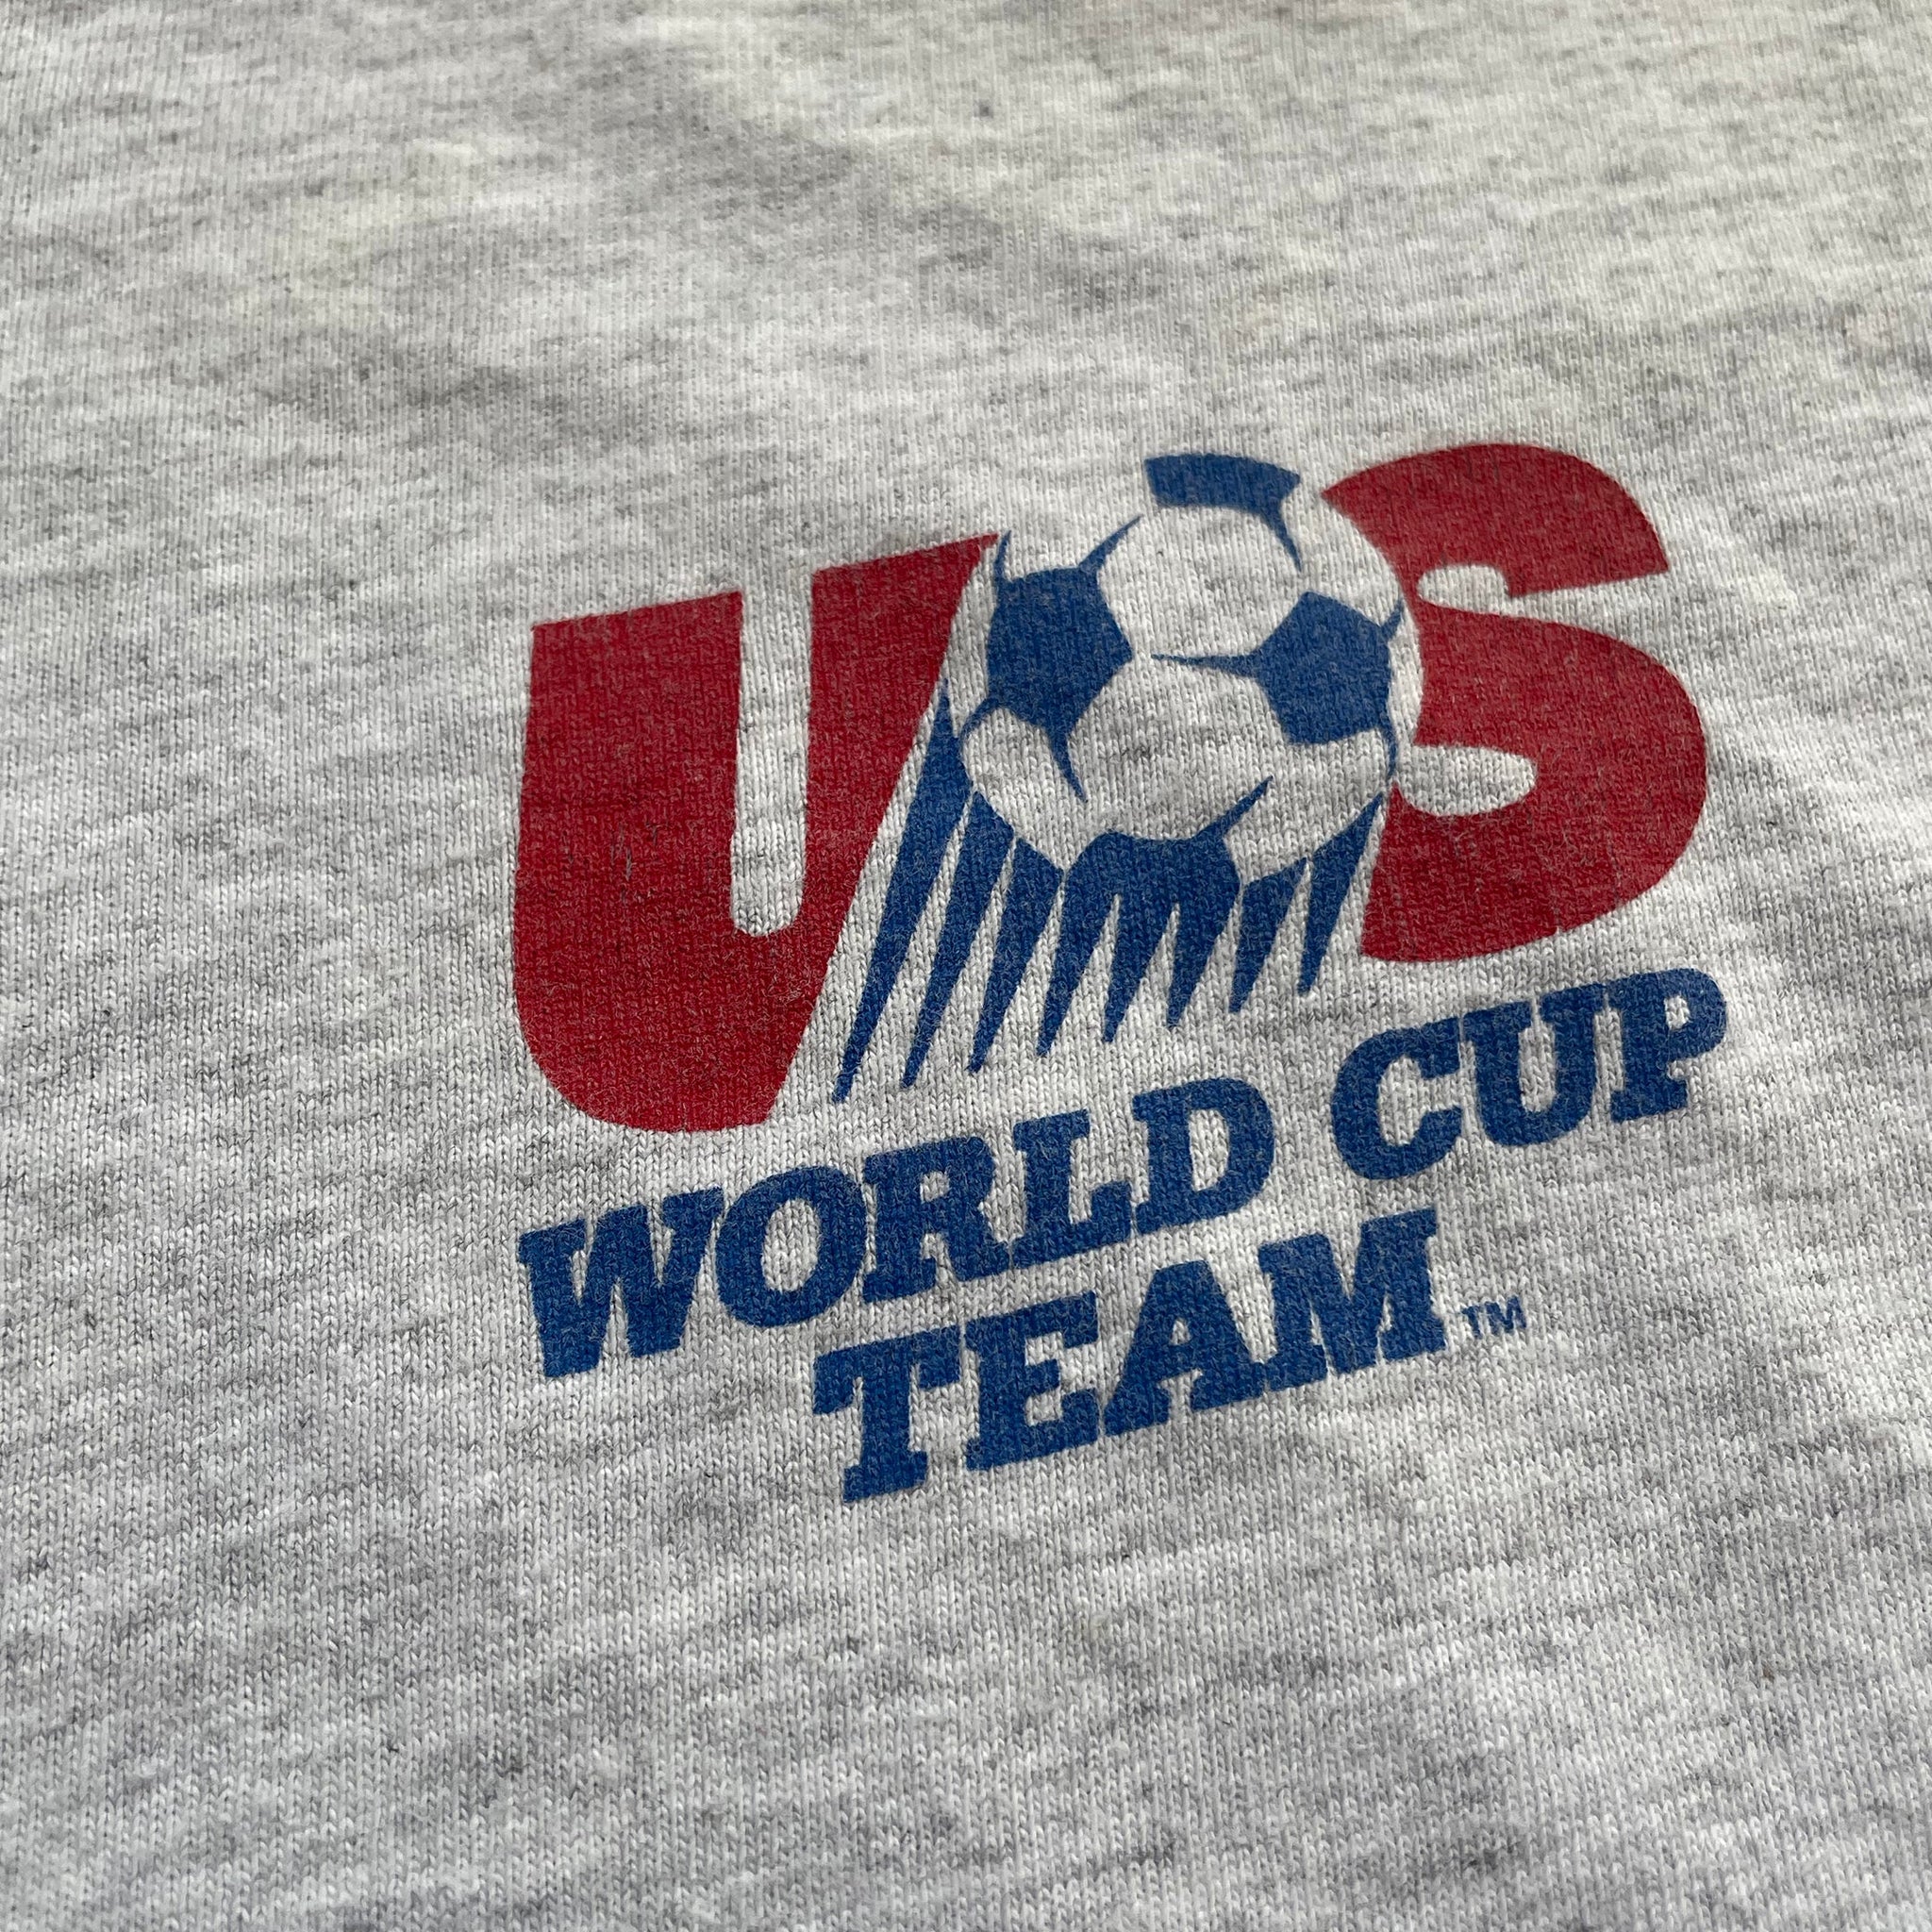 US World Cup Team T-Shirt - L